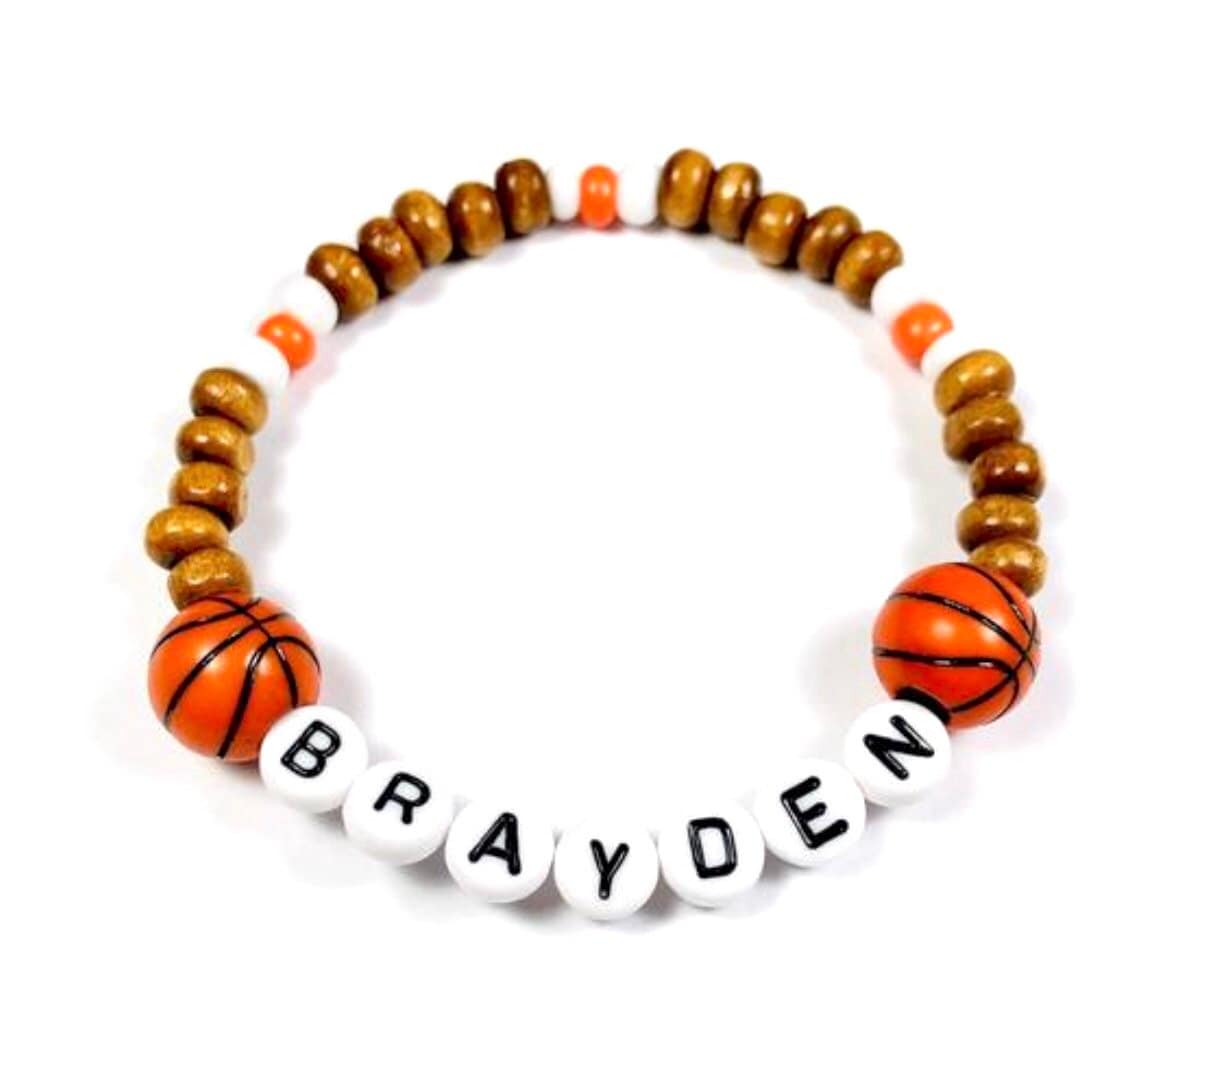 Sports themed bracelets set of 10 / boys basketball football soccer baseball party favors / sports team gifts kids